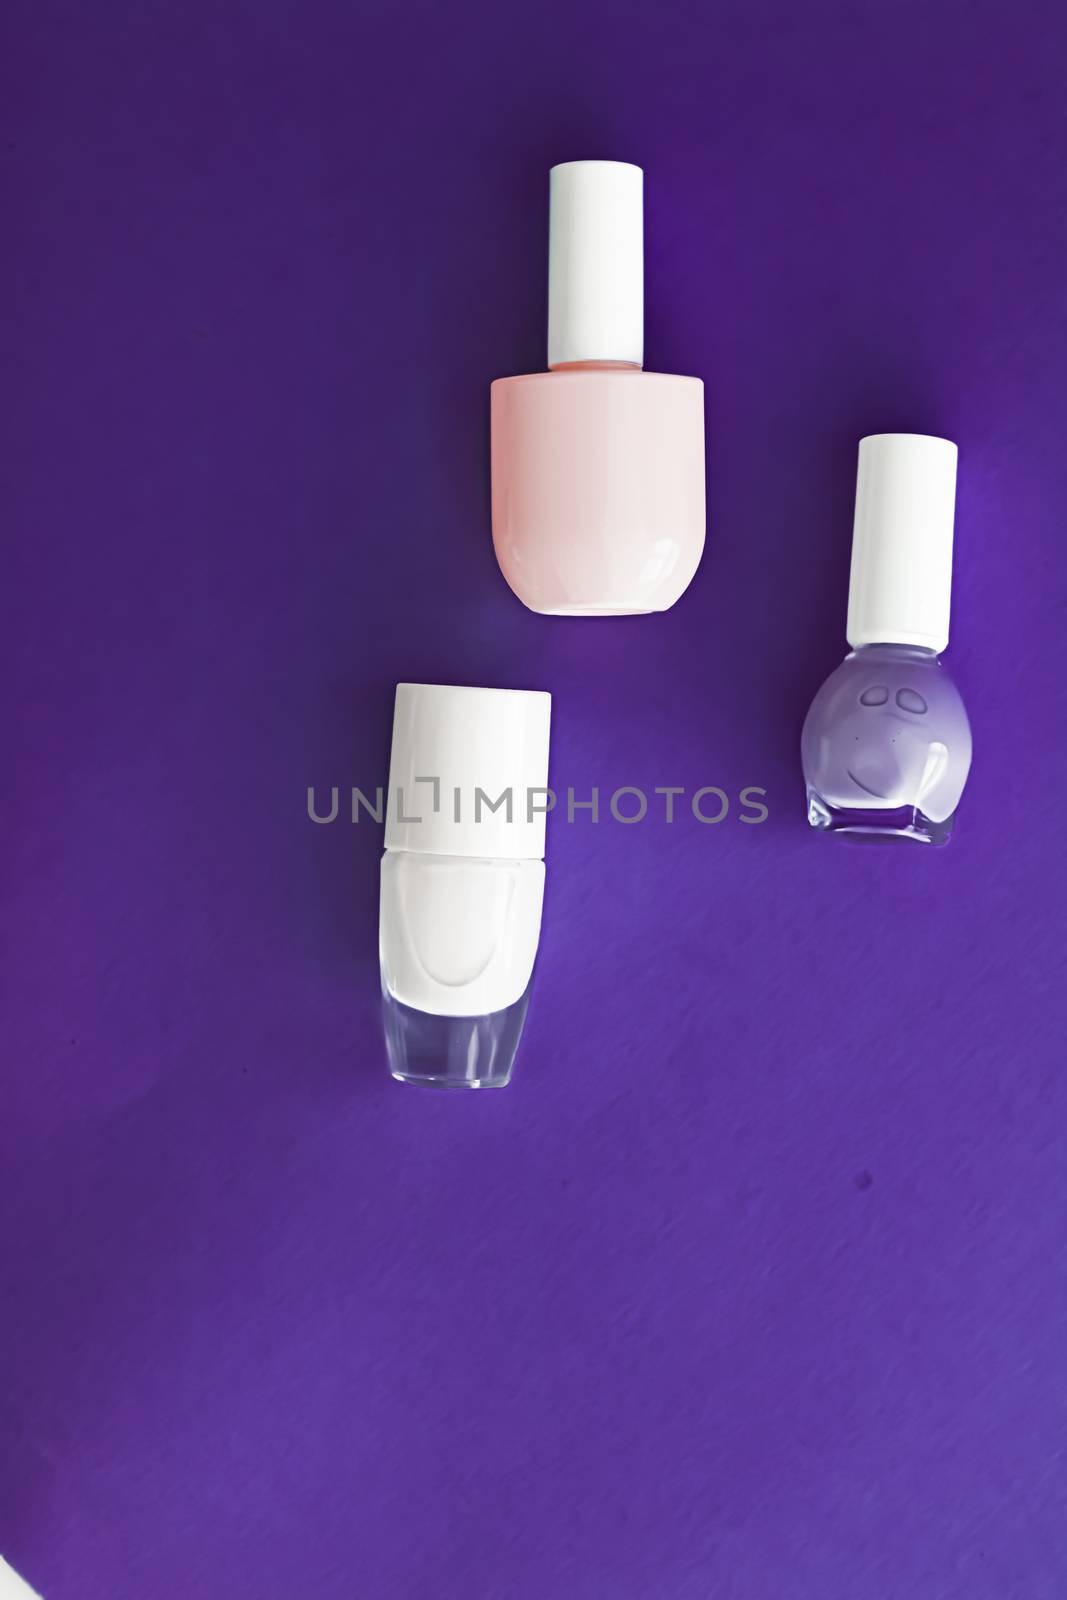 Nail polish bottles on dark purple background, beauty brand by Anneleven